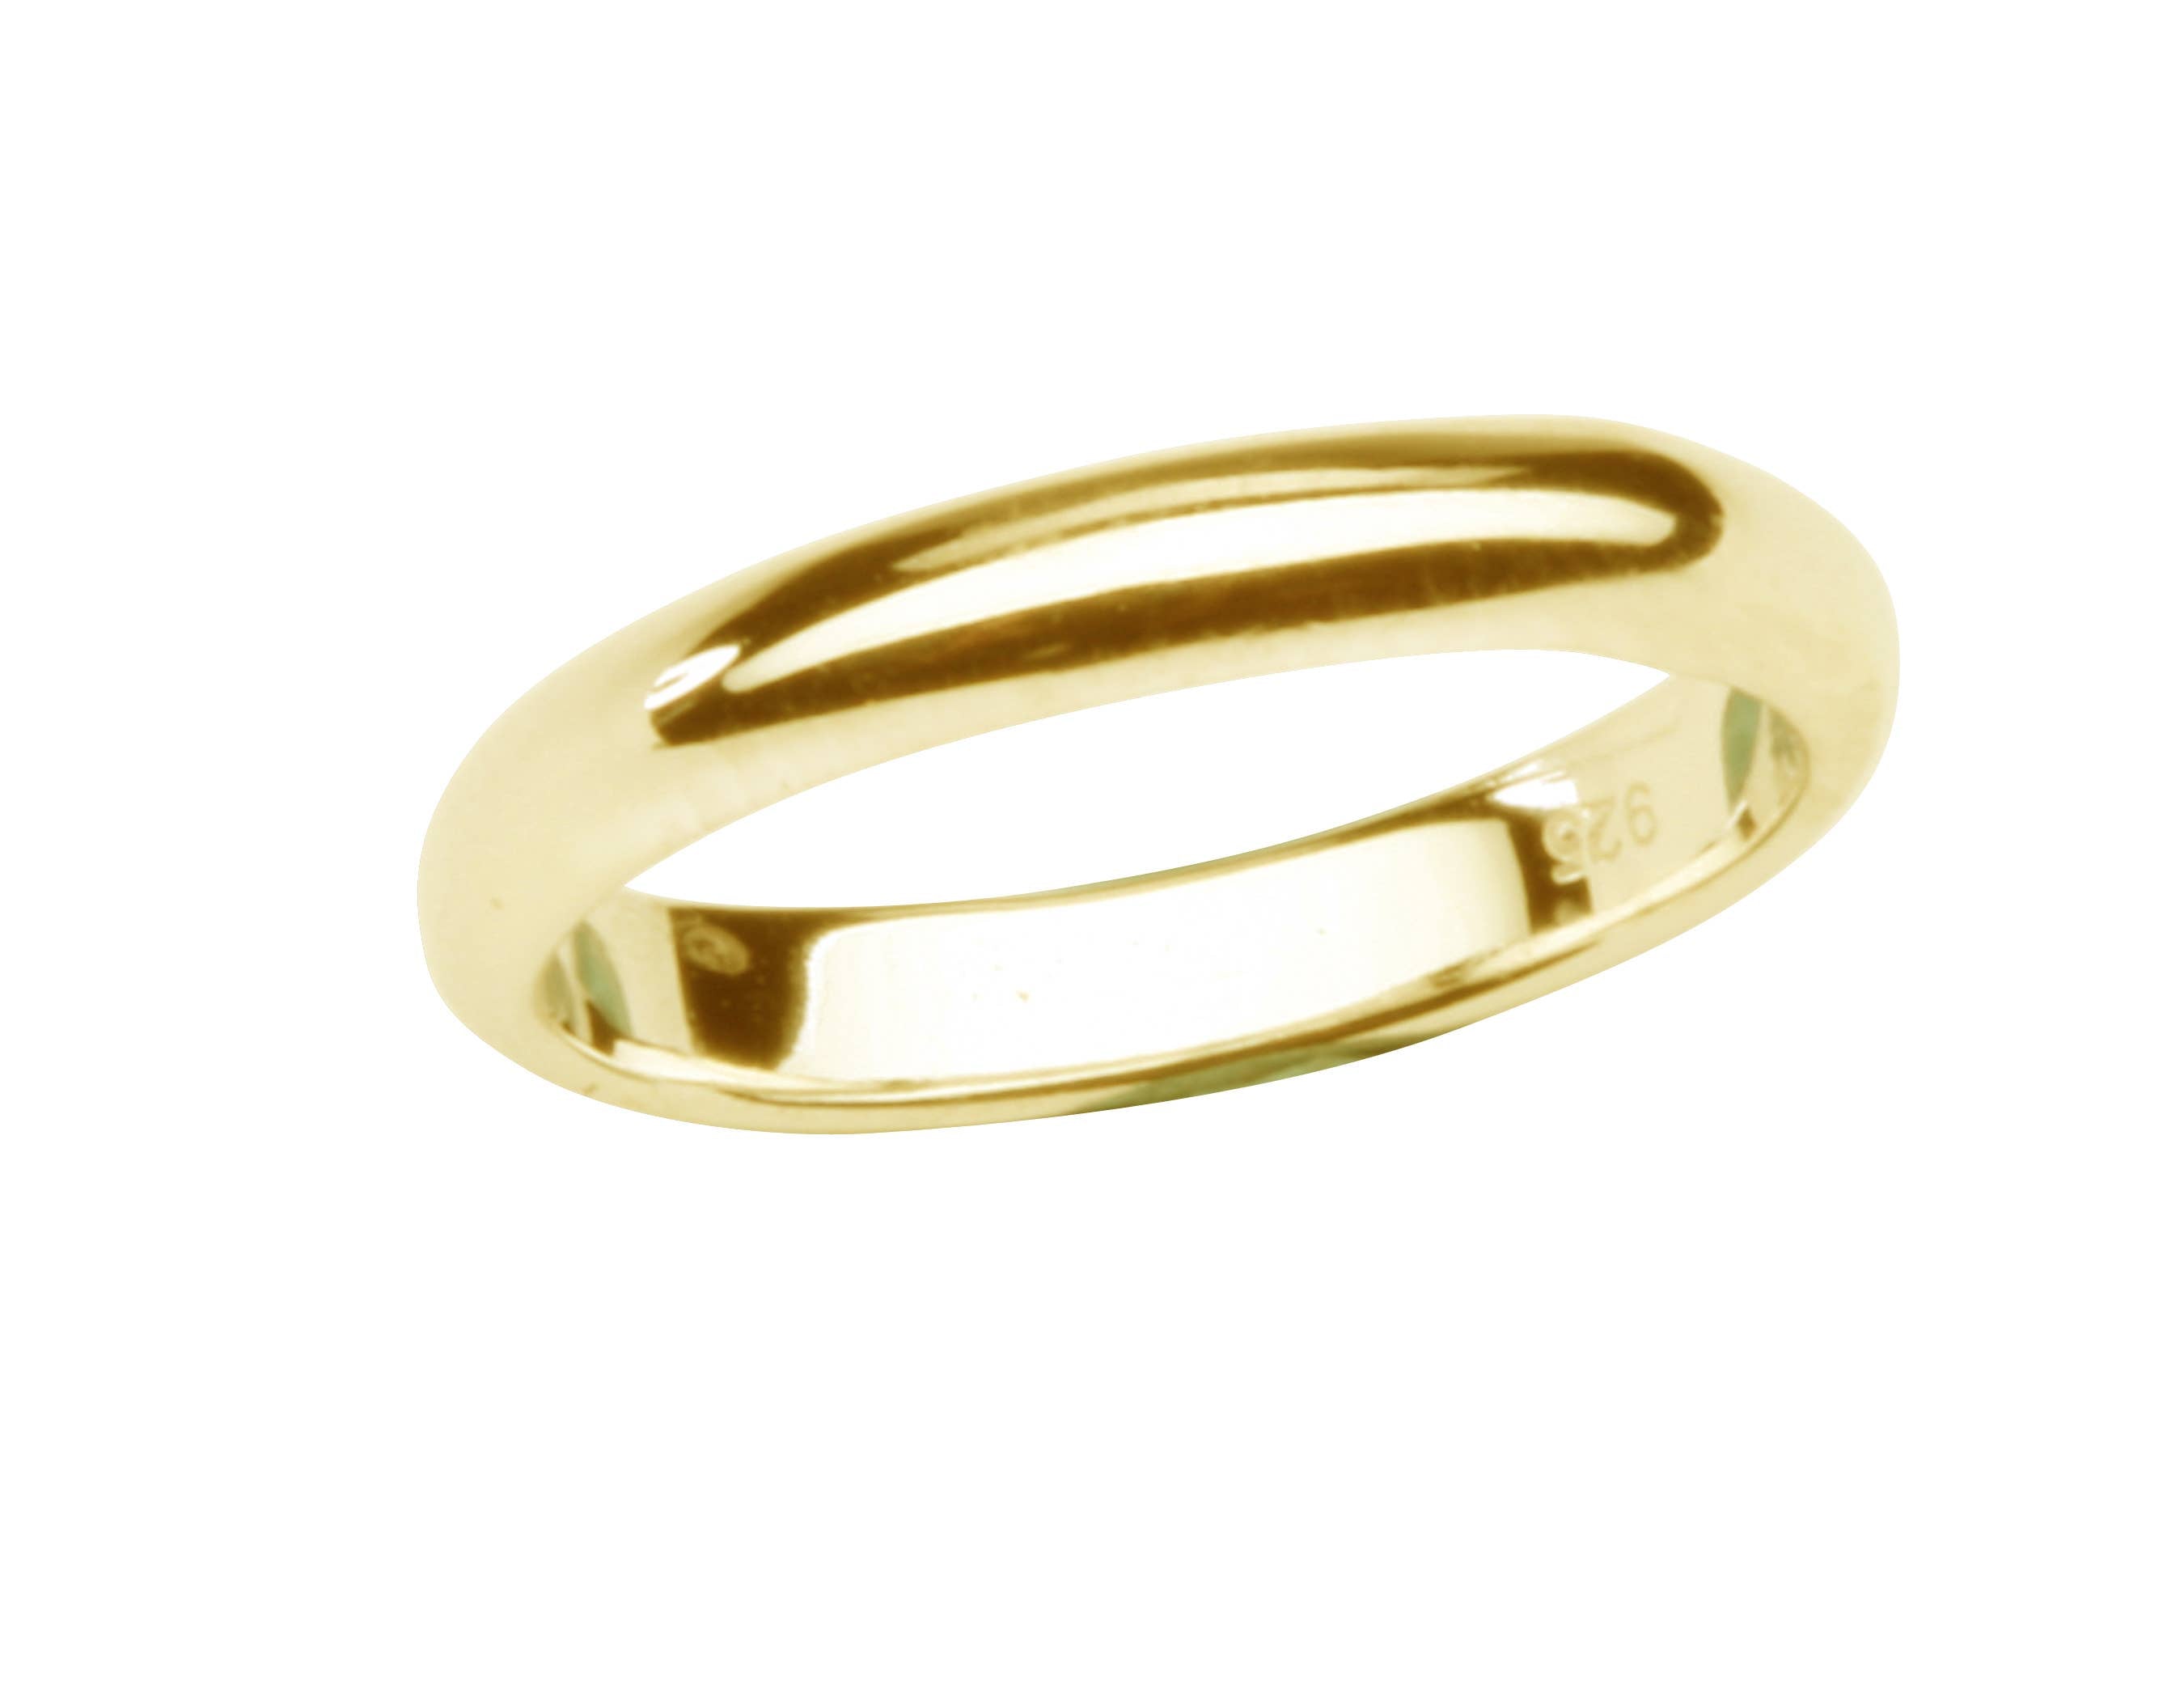 Rings for just born baby From, Swarnsri Gold & Diamonds, Vijayawada. | Gold  chain design, Gold diamond, Rings for men